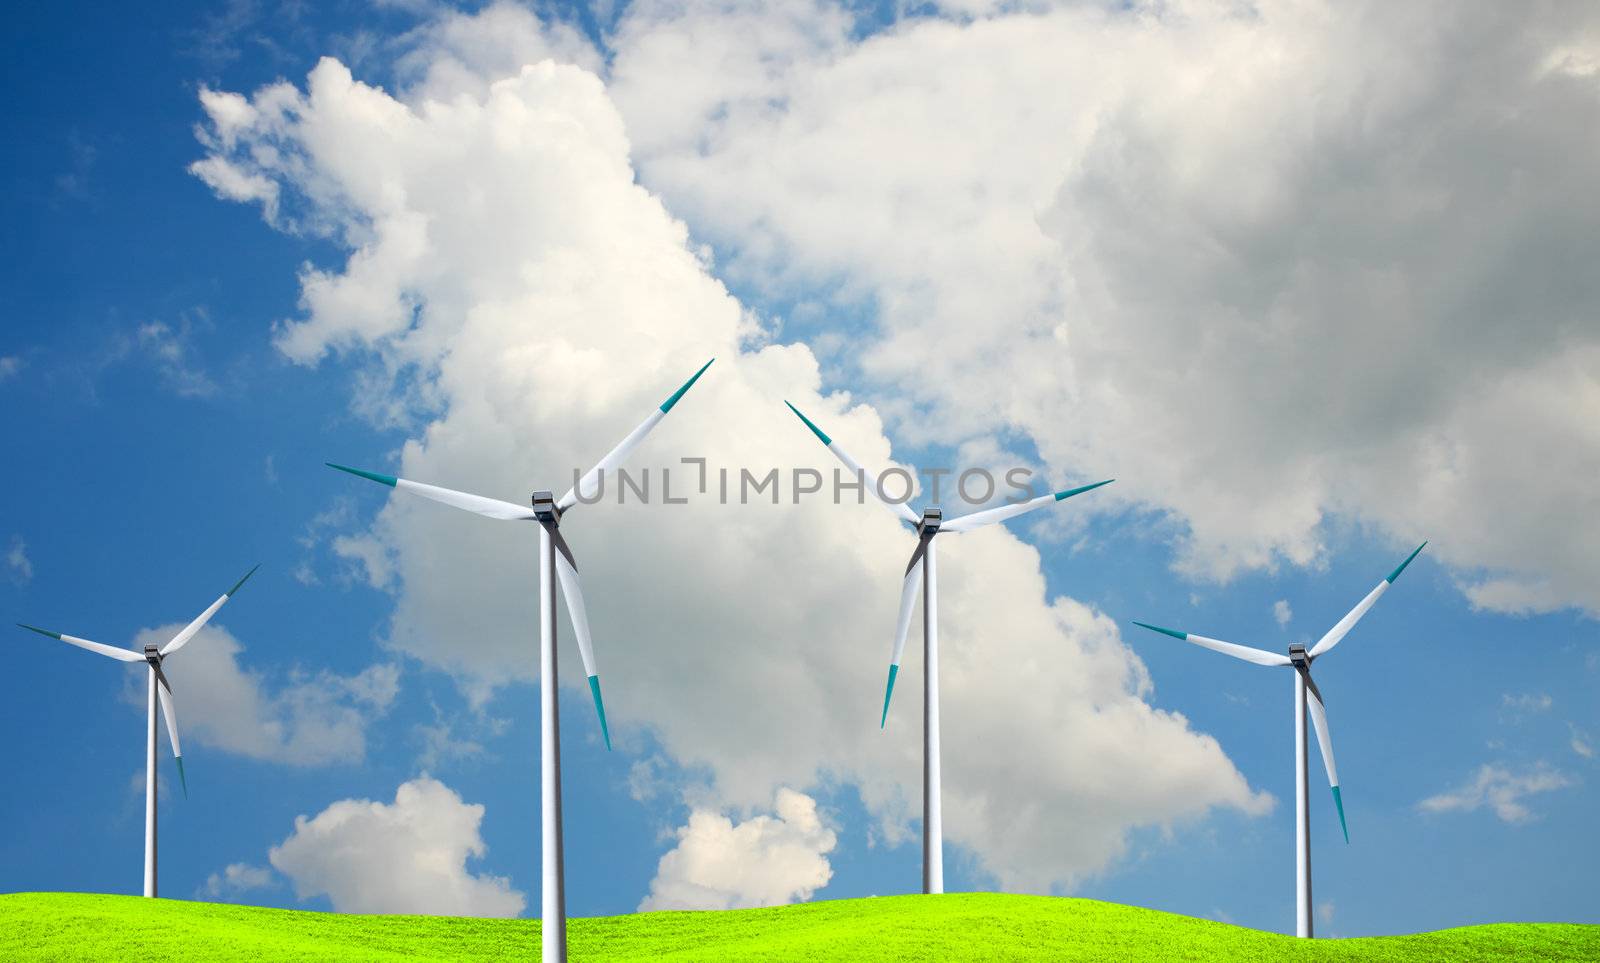 Windmills against a blue sky